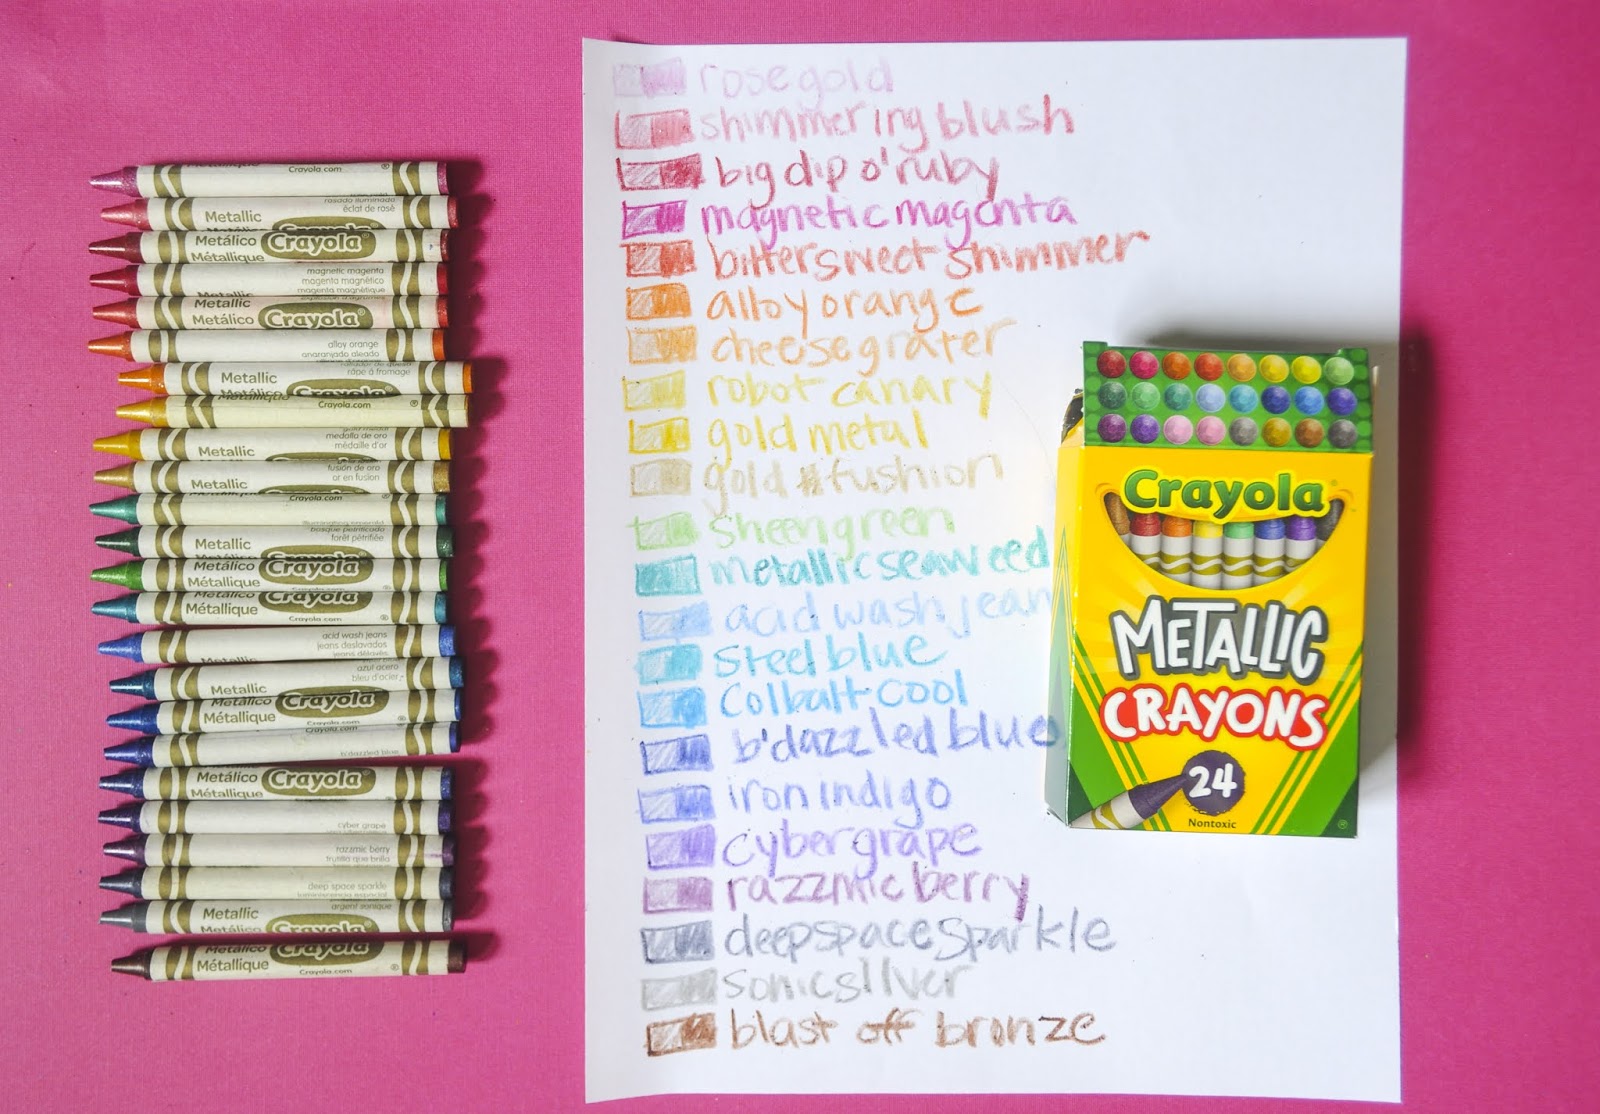 Kids Crayons, Glitter, Pearl, Neon & Metallic - Set of 96